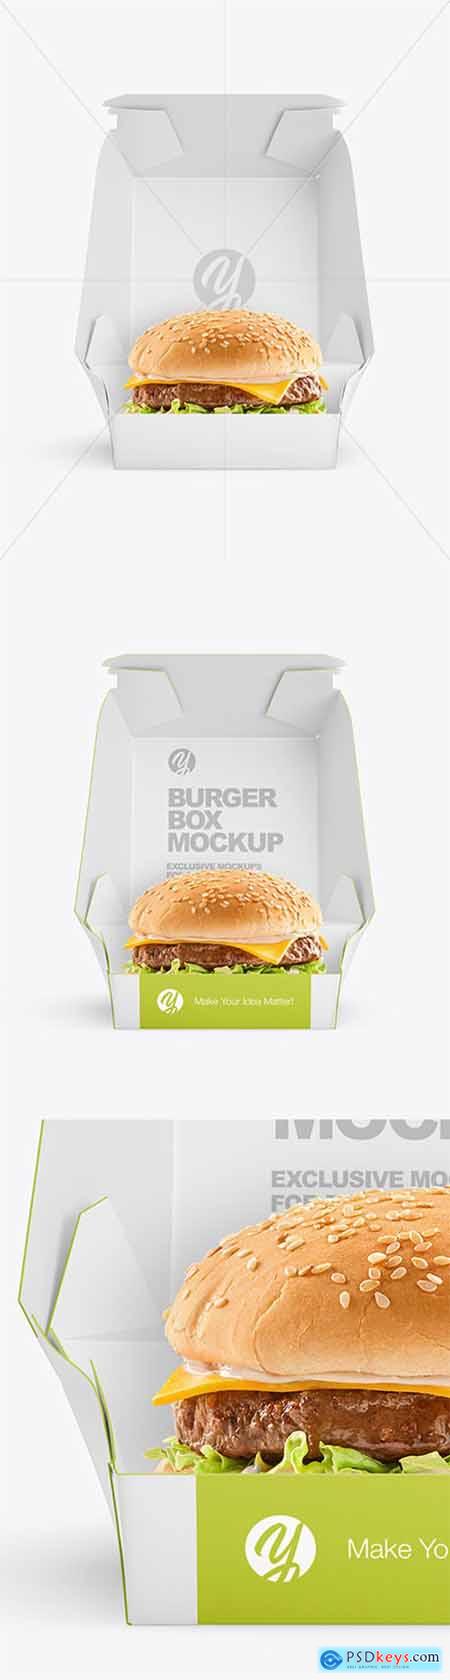 Download Burger In Box Mockup 61279 Free Download Photoshop Vector Stock Image Via Torrent Zippyshare From Psdkeys Com